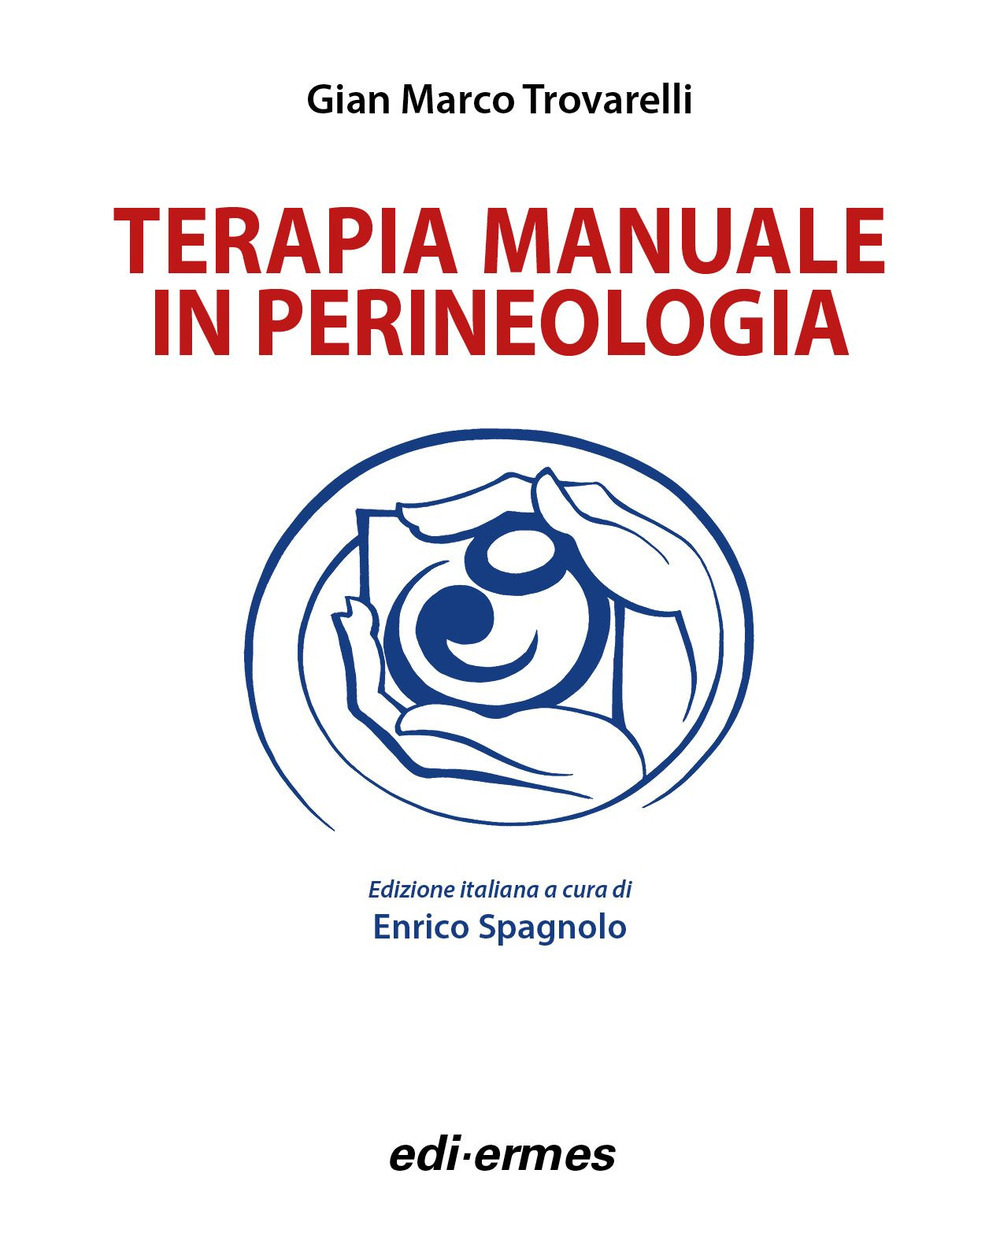 Terapia manuale in perineologia